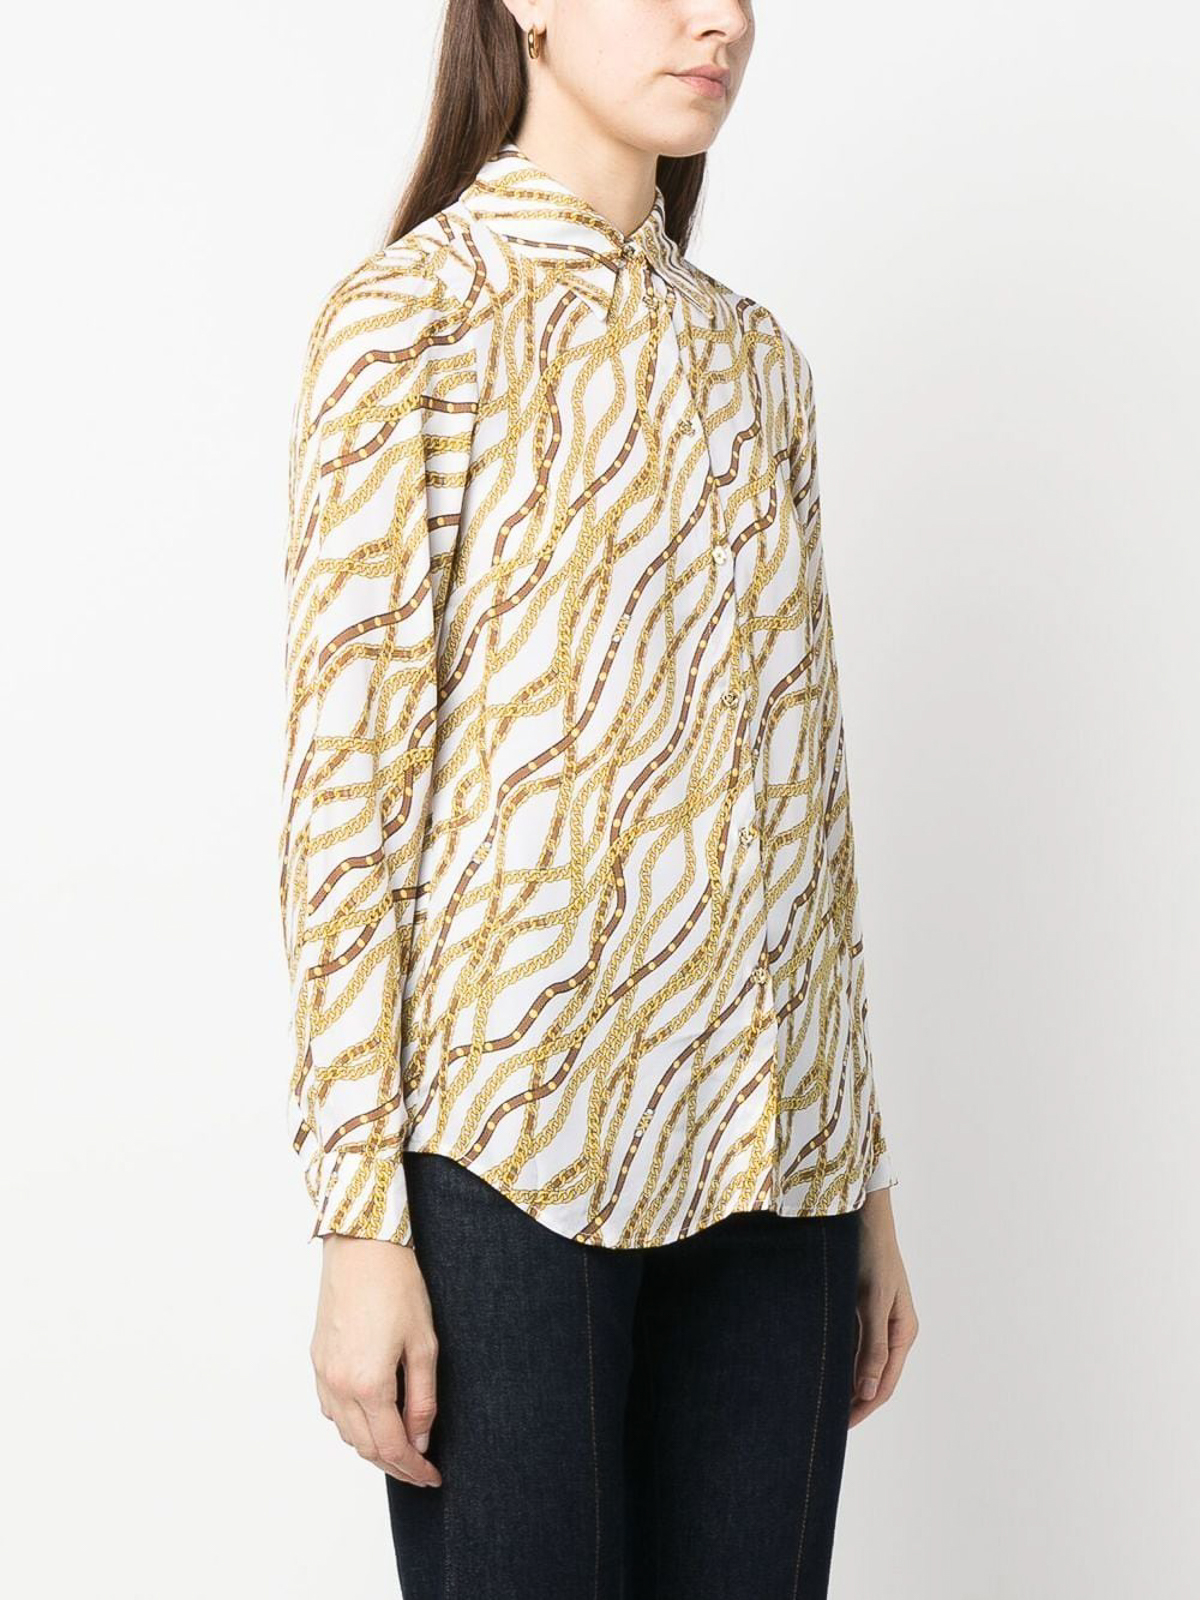 Shirts Michael Kors - Chain-print shirt - MS340A68EE100 